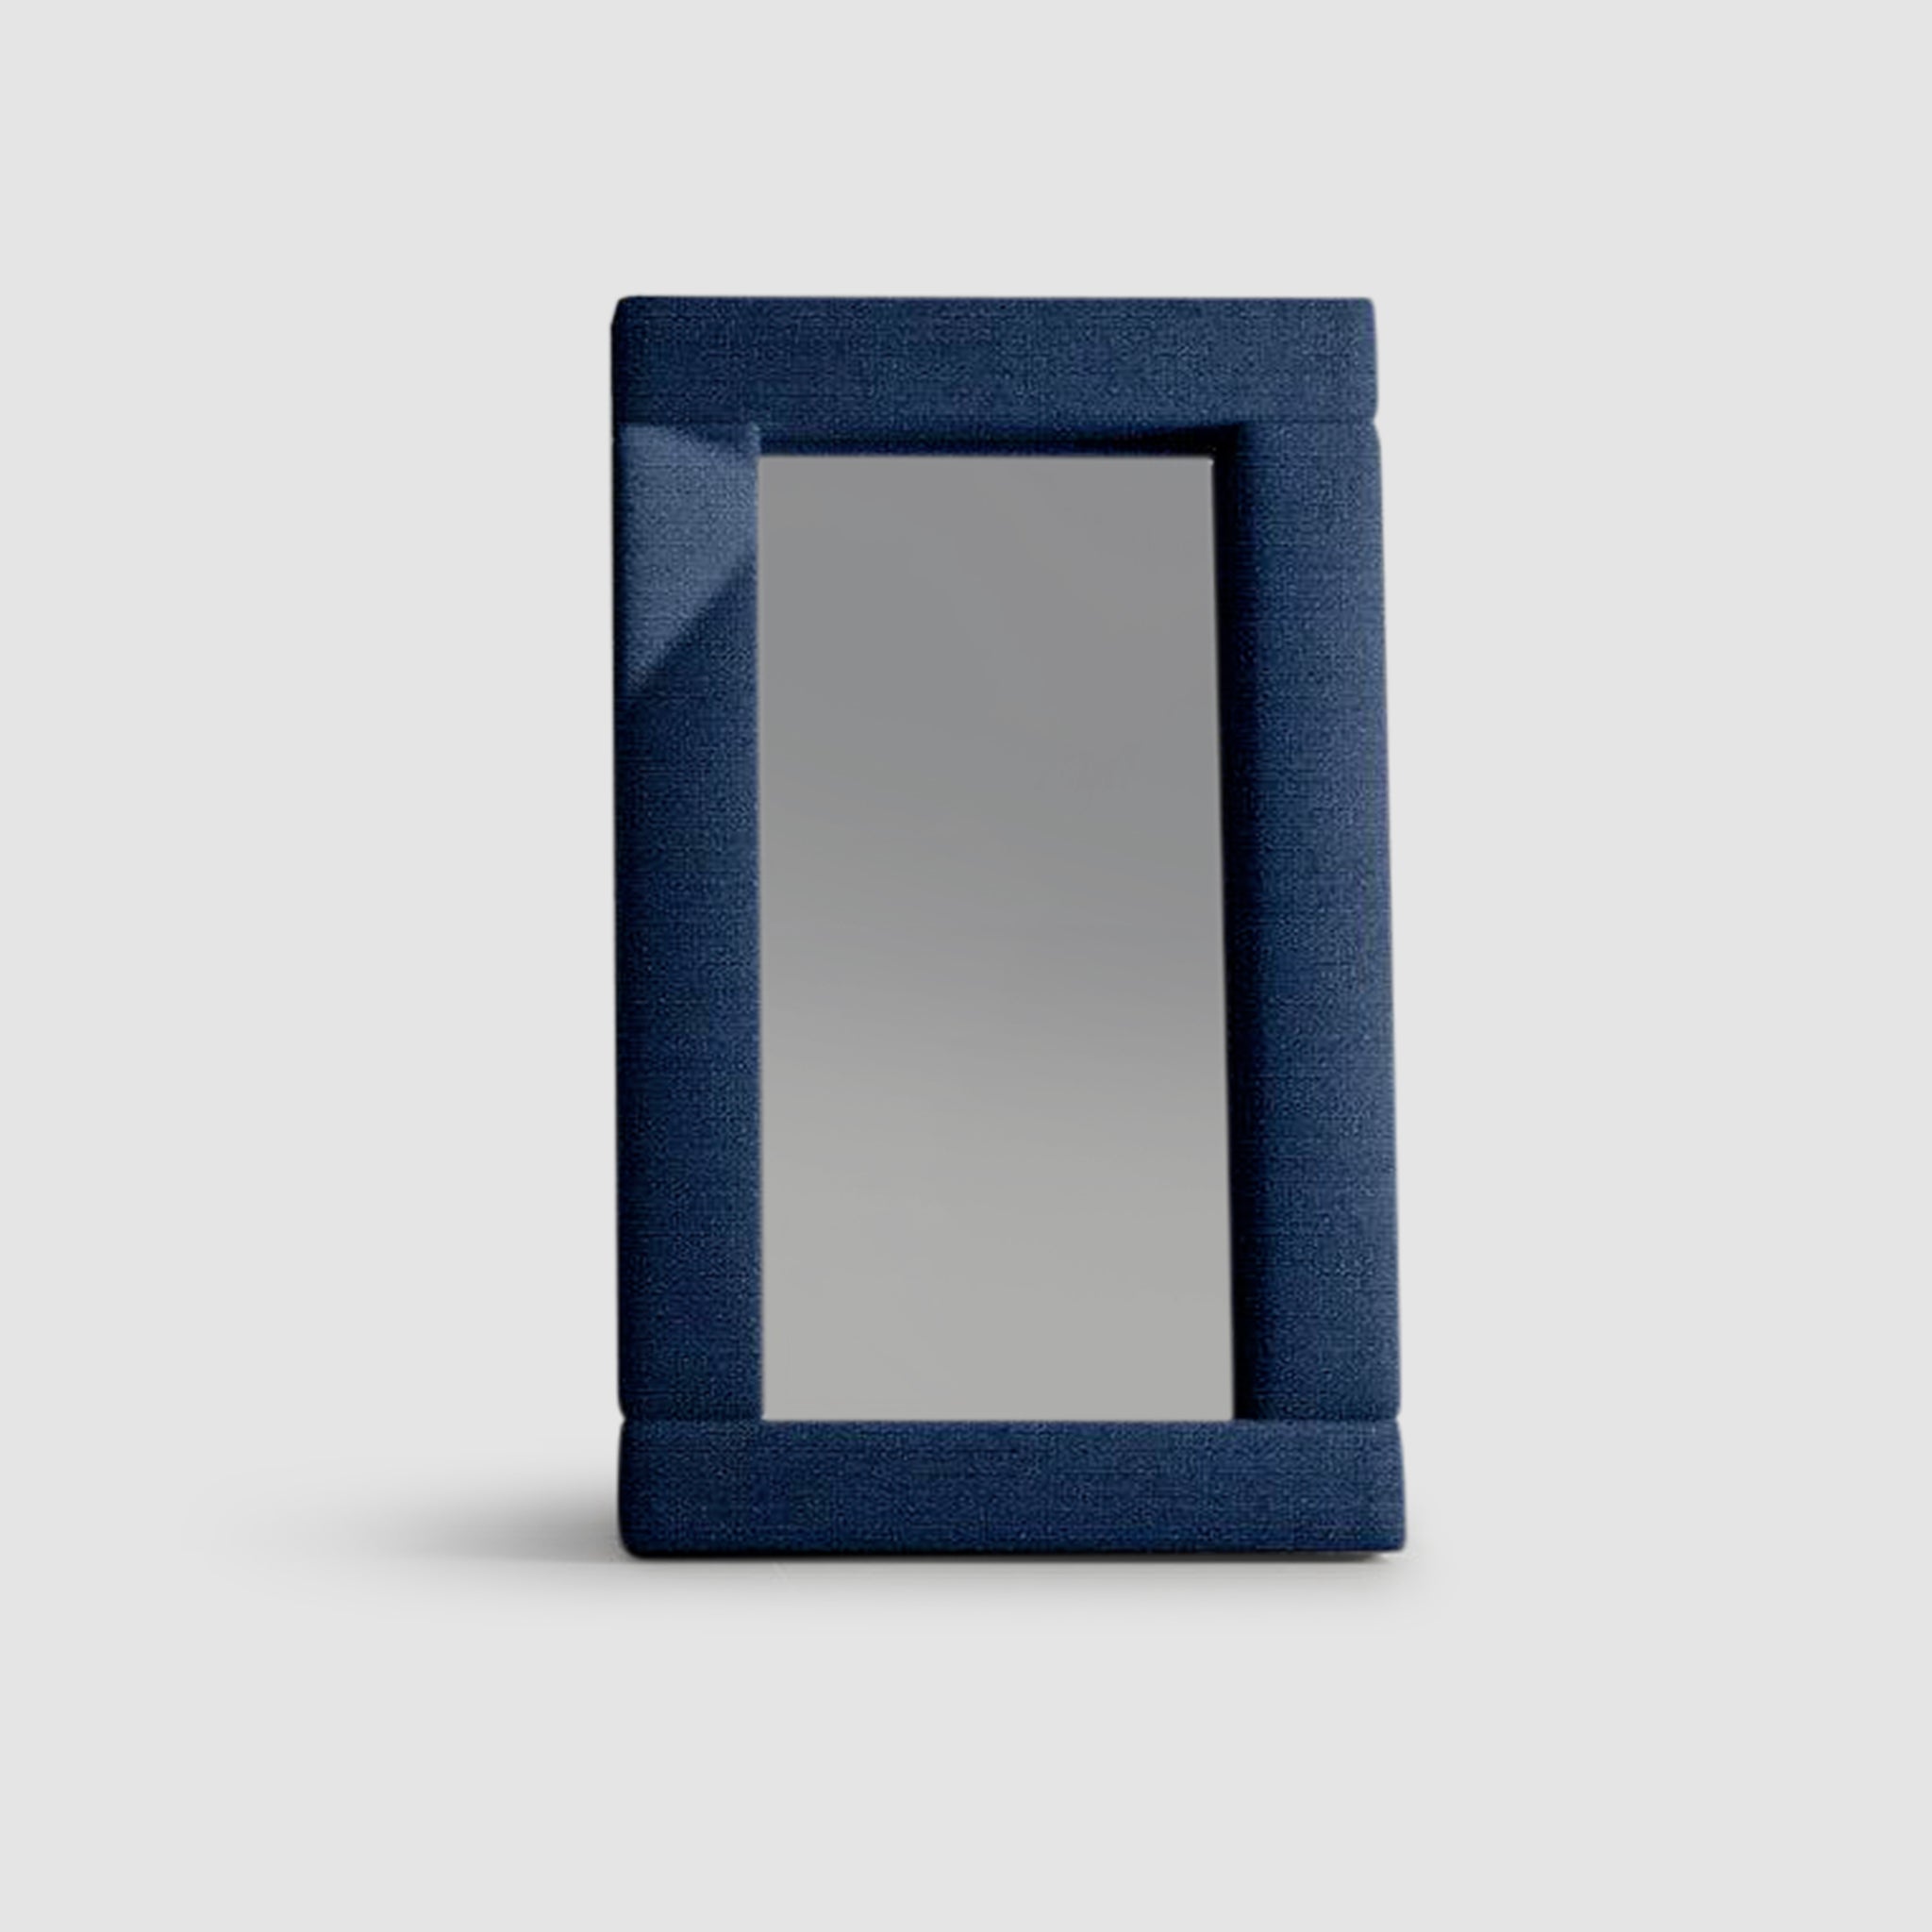 Rectangular mirror with a dark blue padded frame